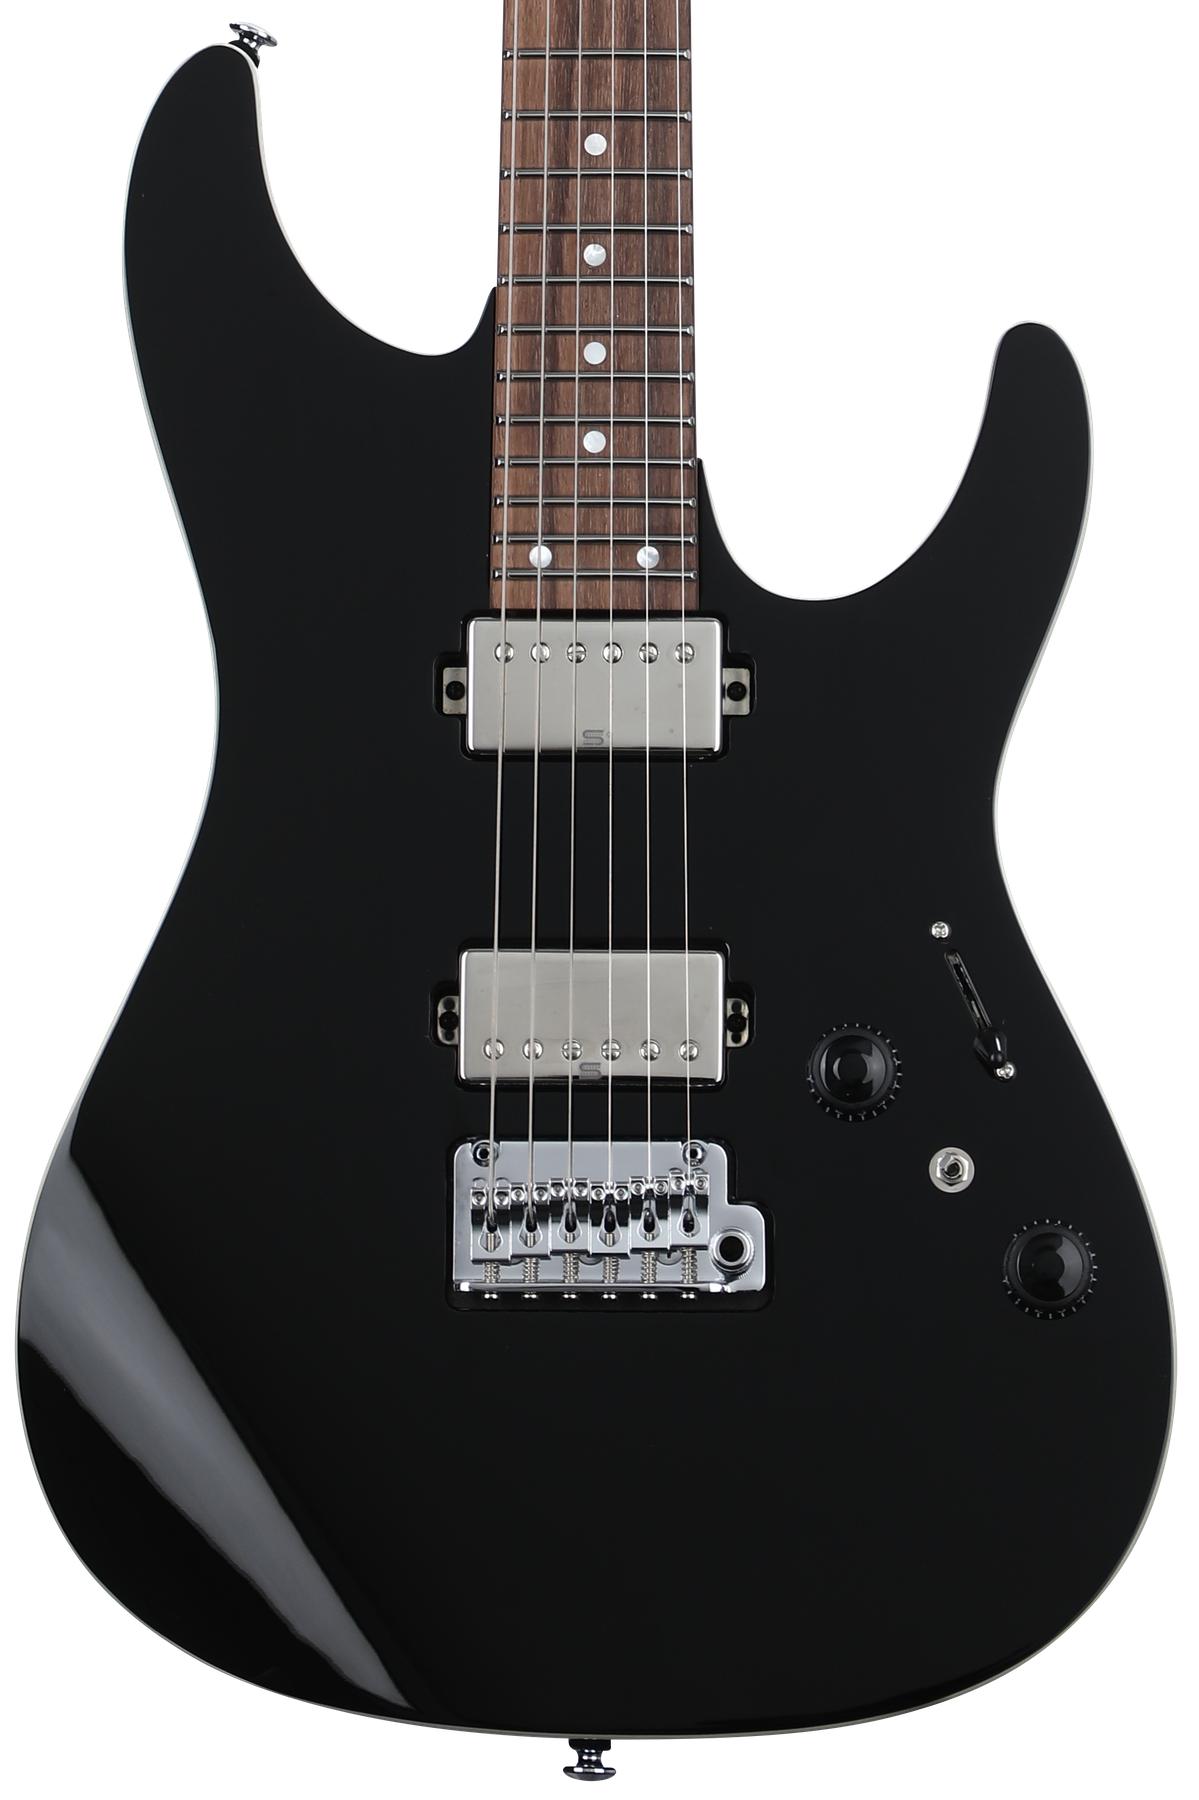 Ibanez Premium AZ42P1 Electric Guitar - Black